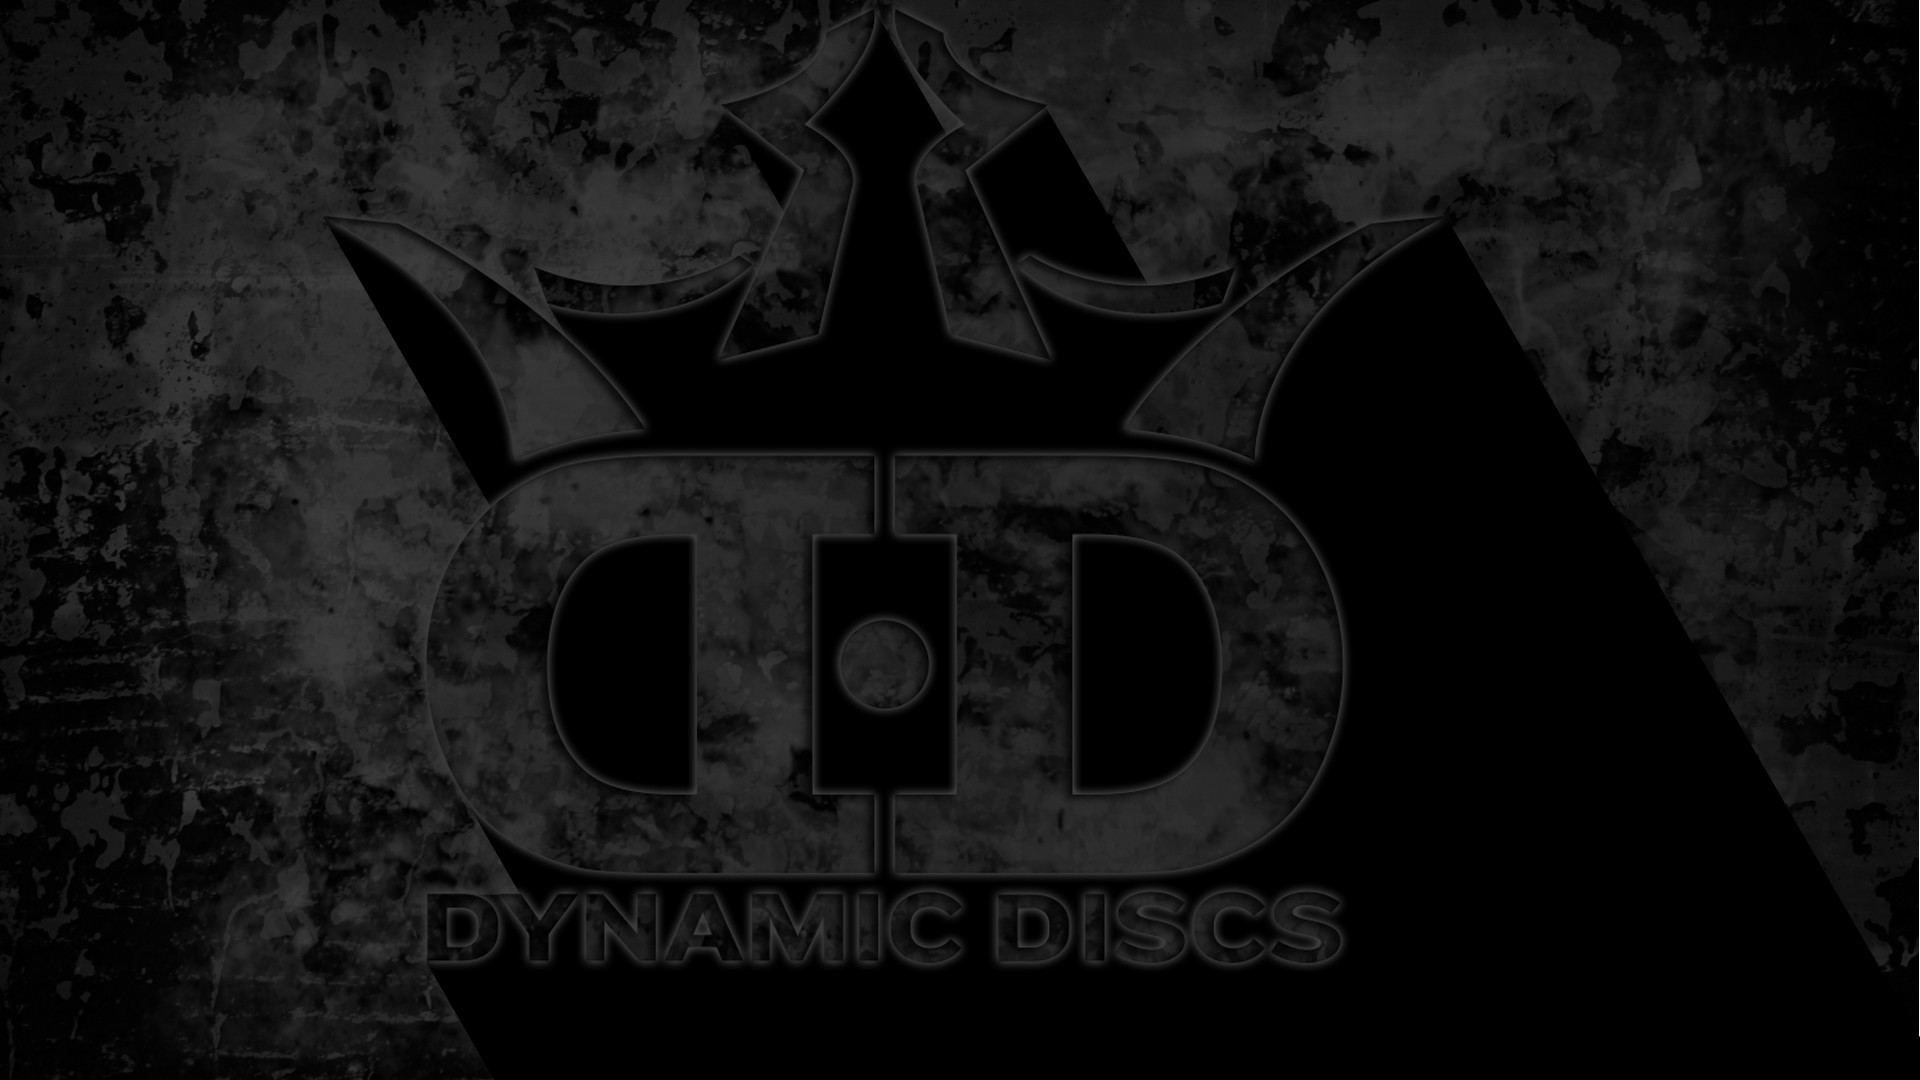 1920x1080 ... downloads dynamic discs desktop wallpapers ...